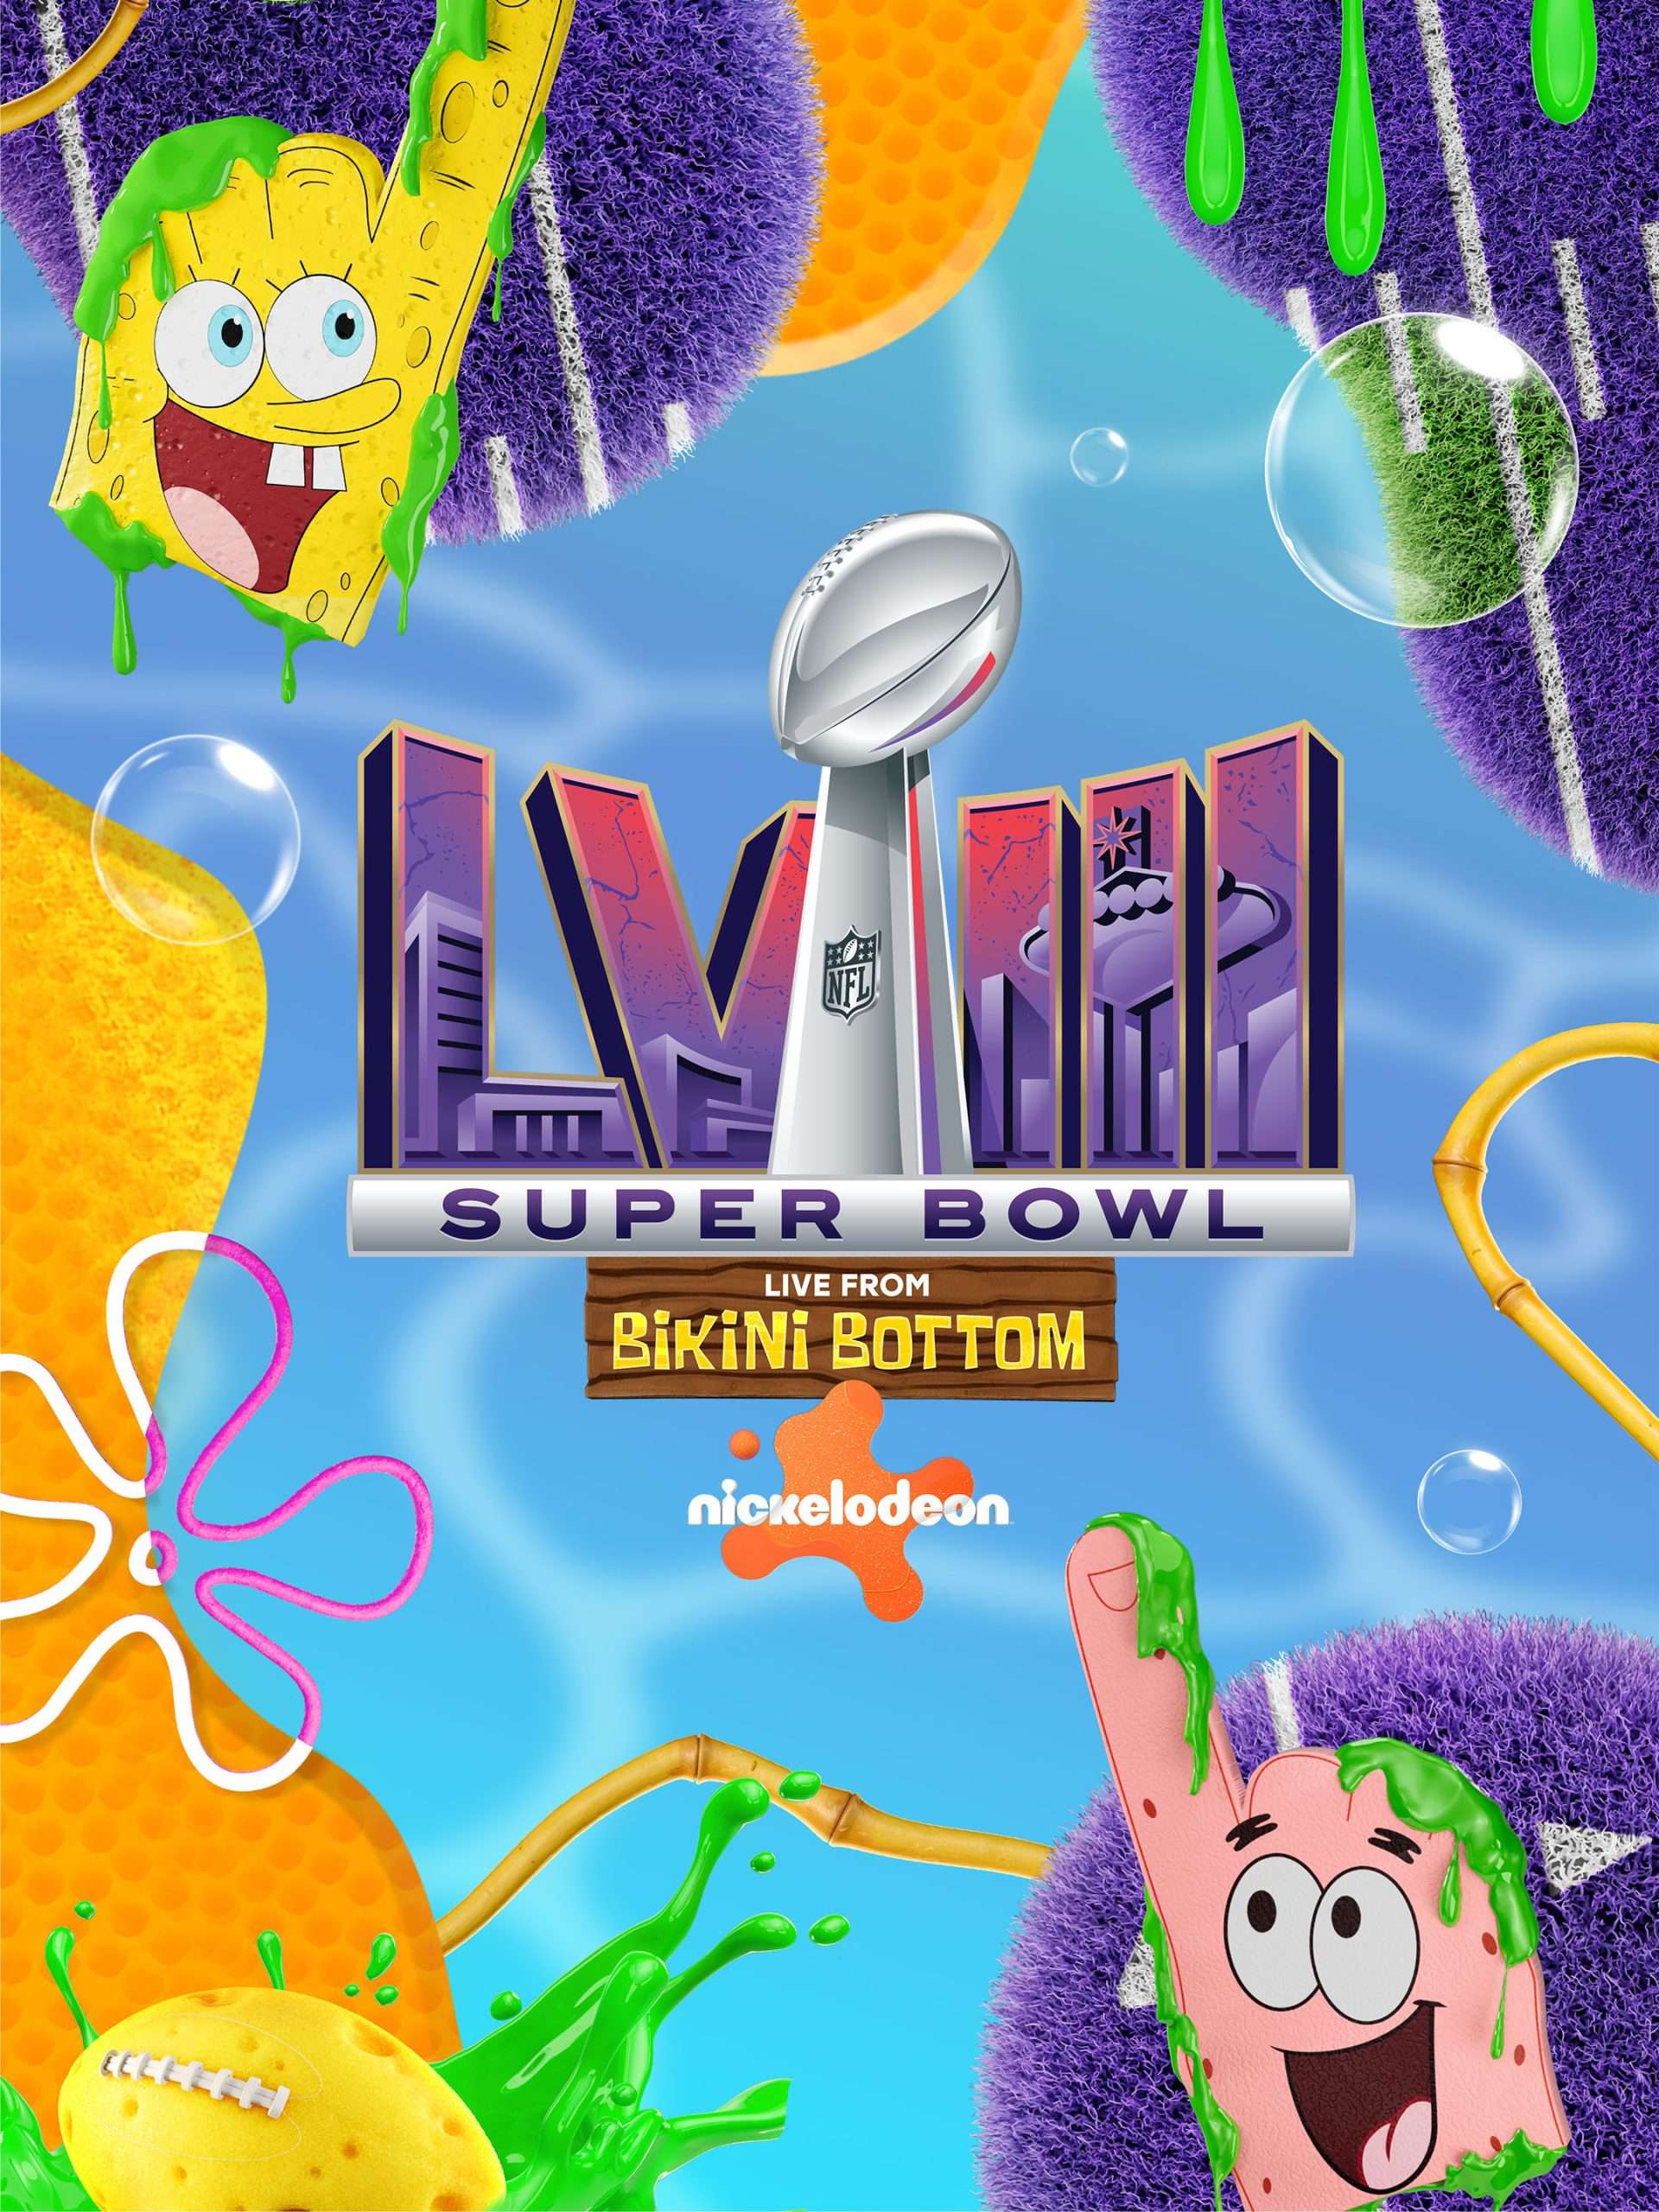 Super Bowl LVIII Live From Bikini Bottom "San Francisco 49ers vs